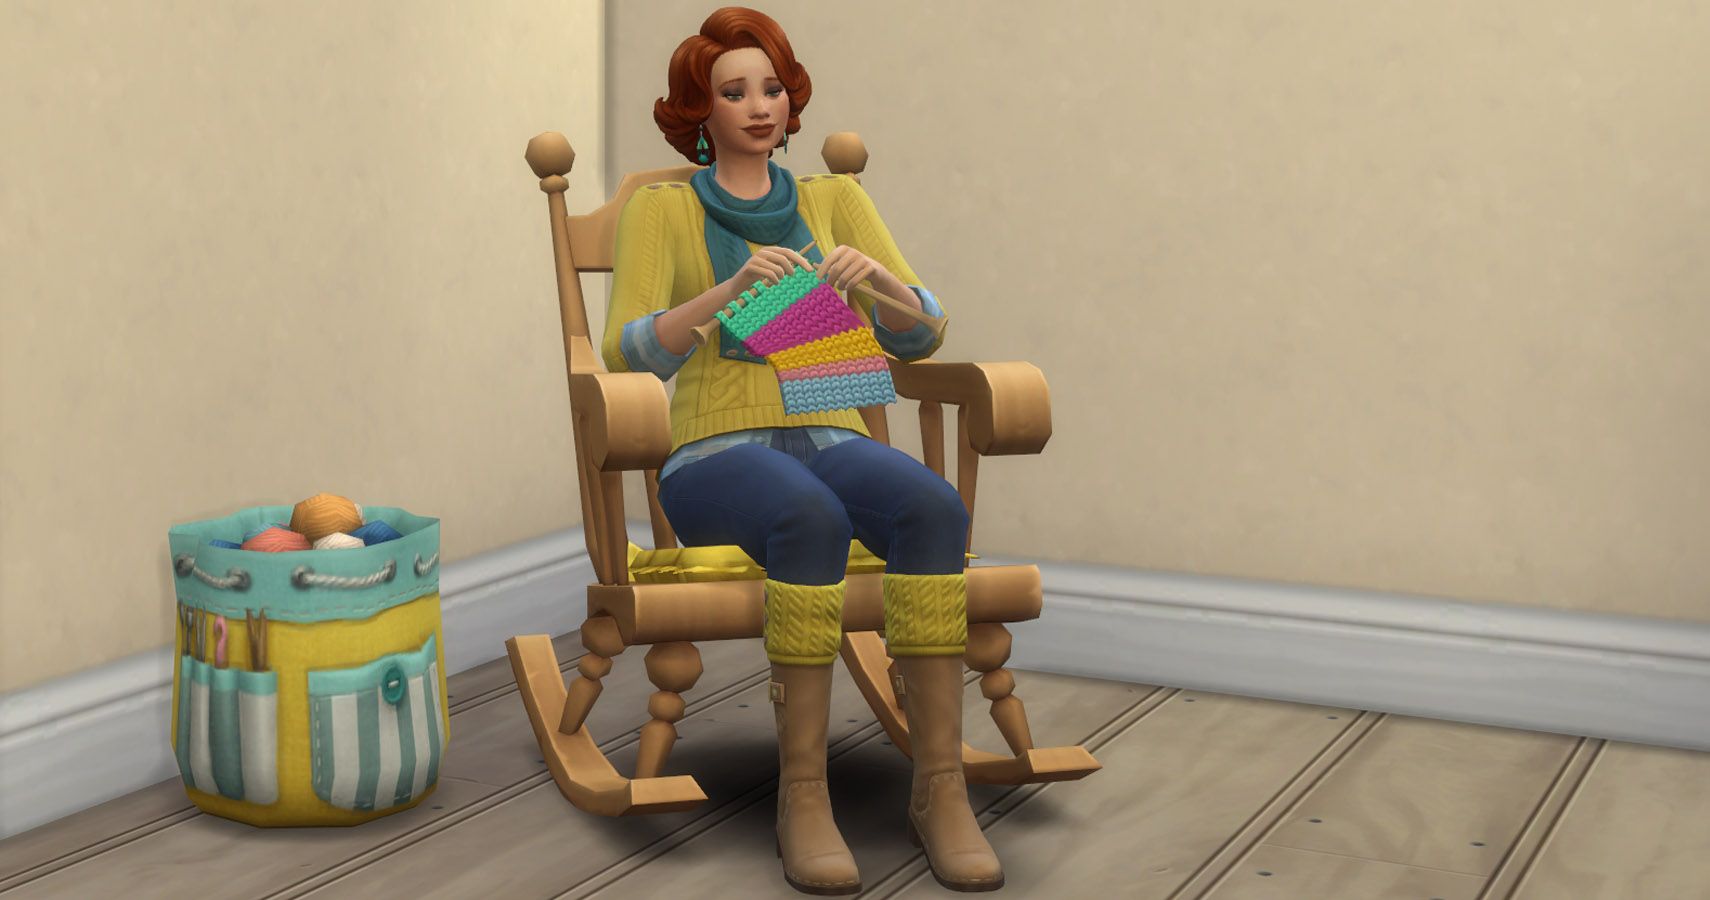 A sim in a rocking chair knitting.